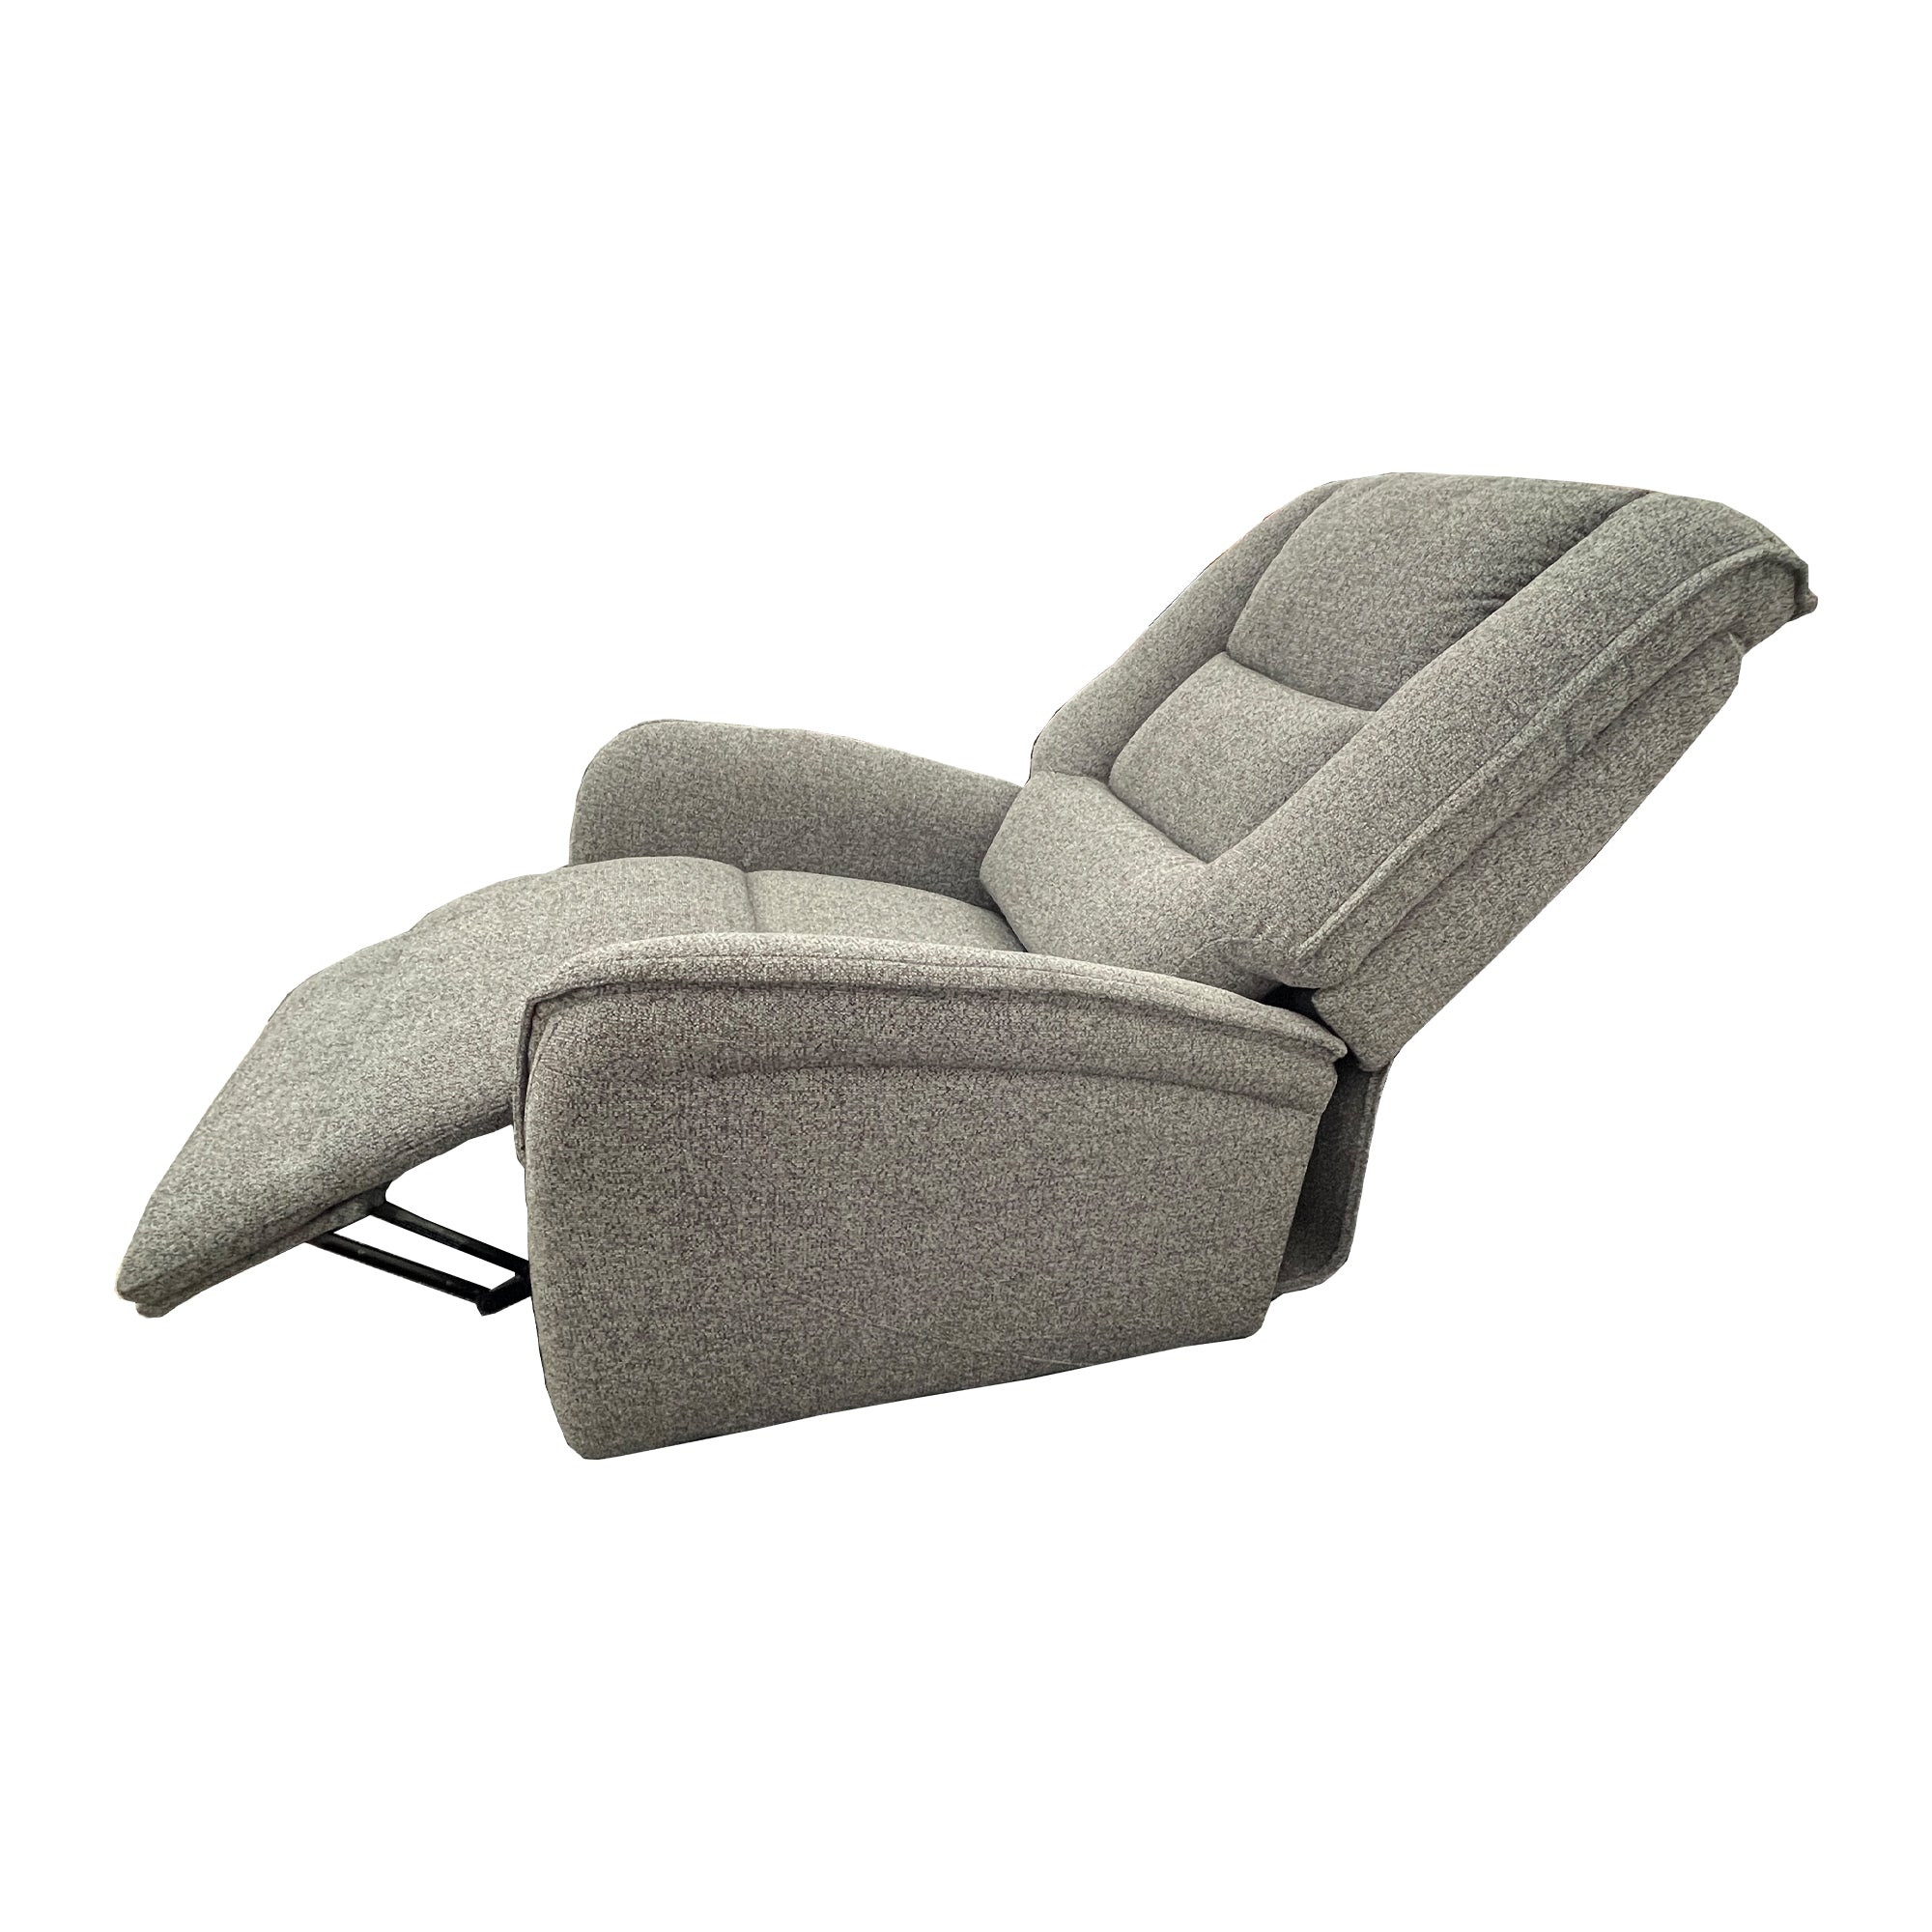 Rialto Lift Chair - Believe Grey Fabric